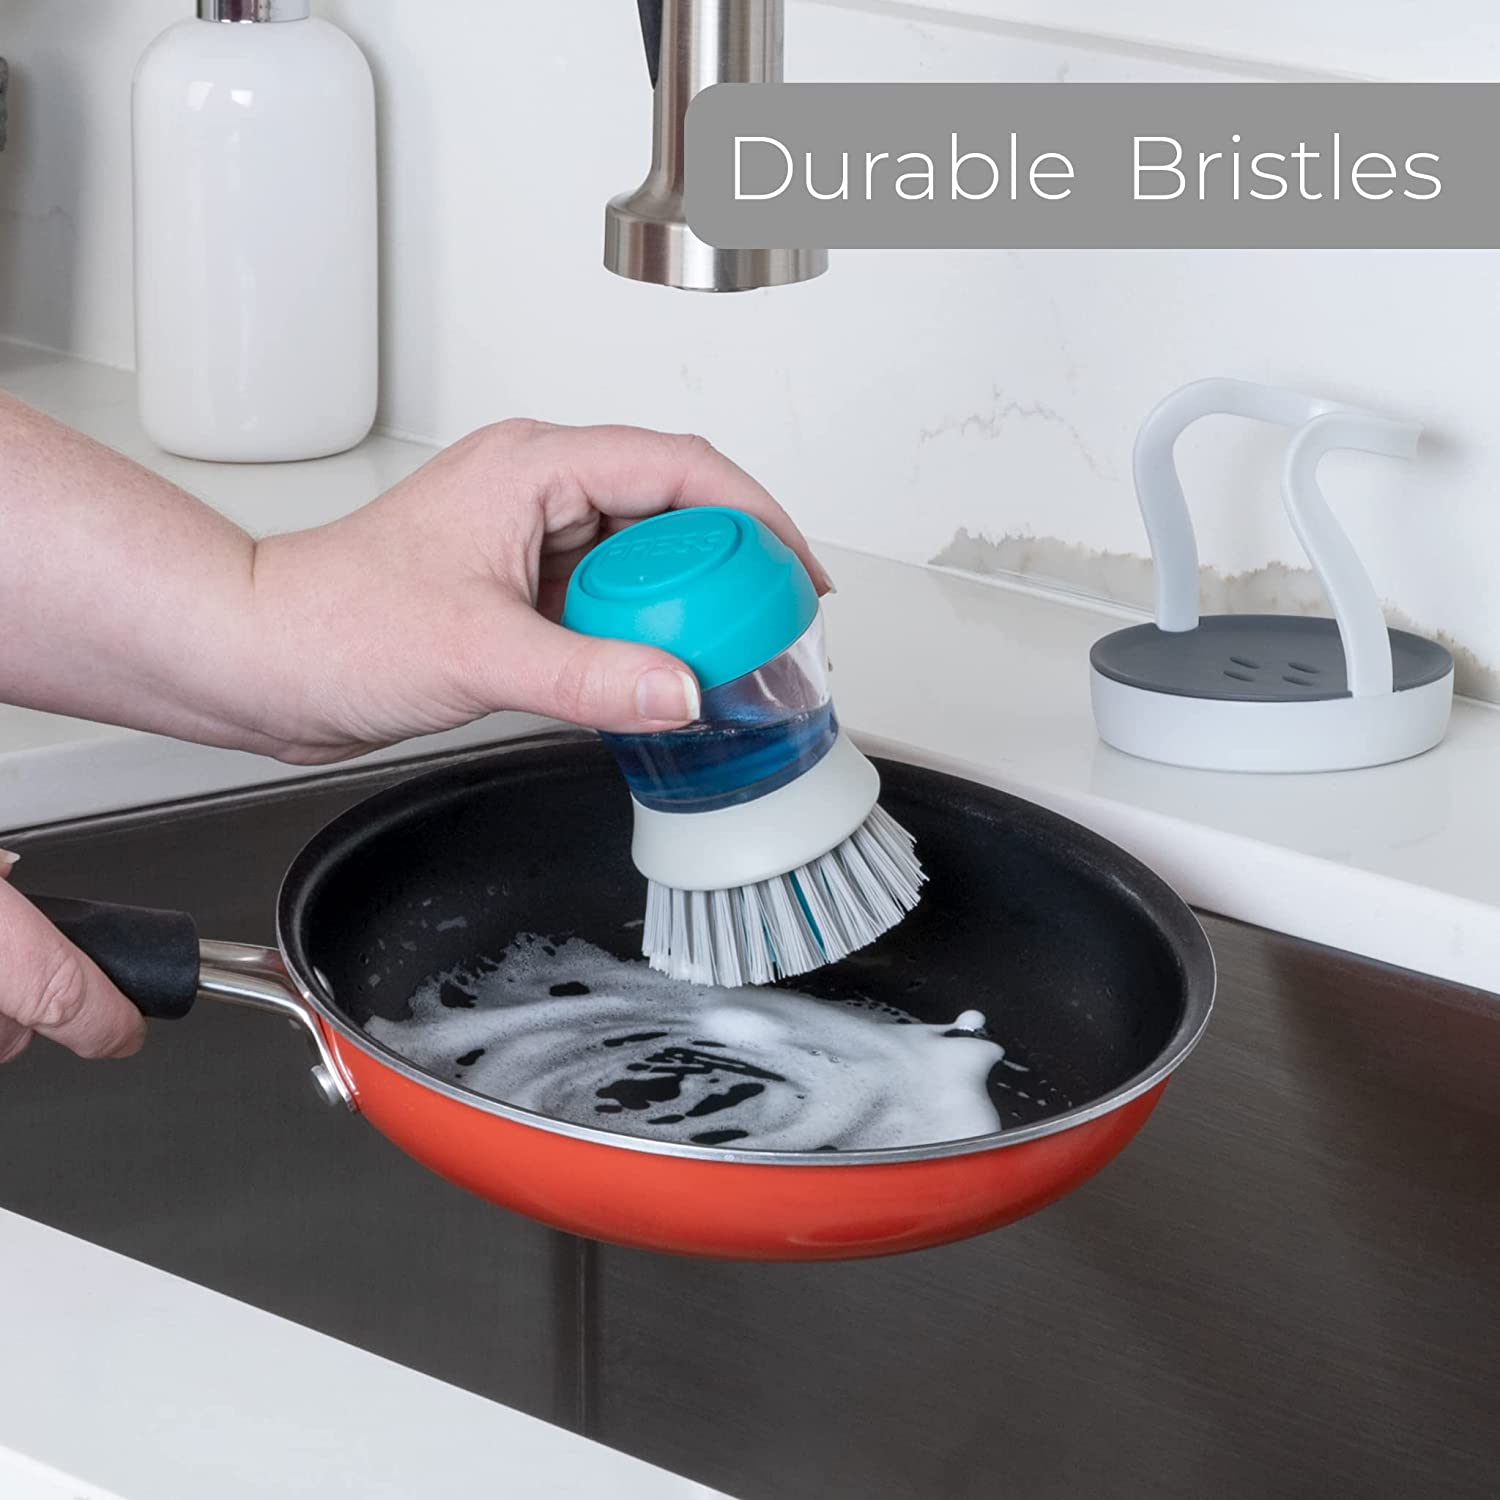 Smart Design Soap Dispensing Dish Sponge with Replaceable Head - Non-Slip Brush Handle with Soap Reservoir - Odor Resistant - Cleaning Pots, Pans, PLA